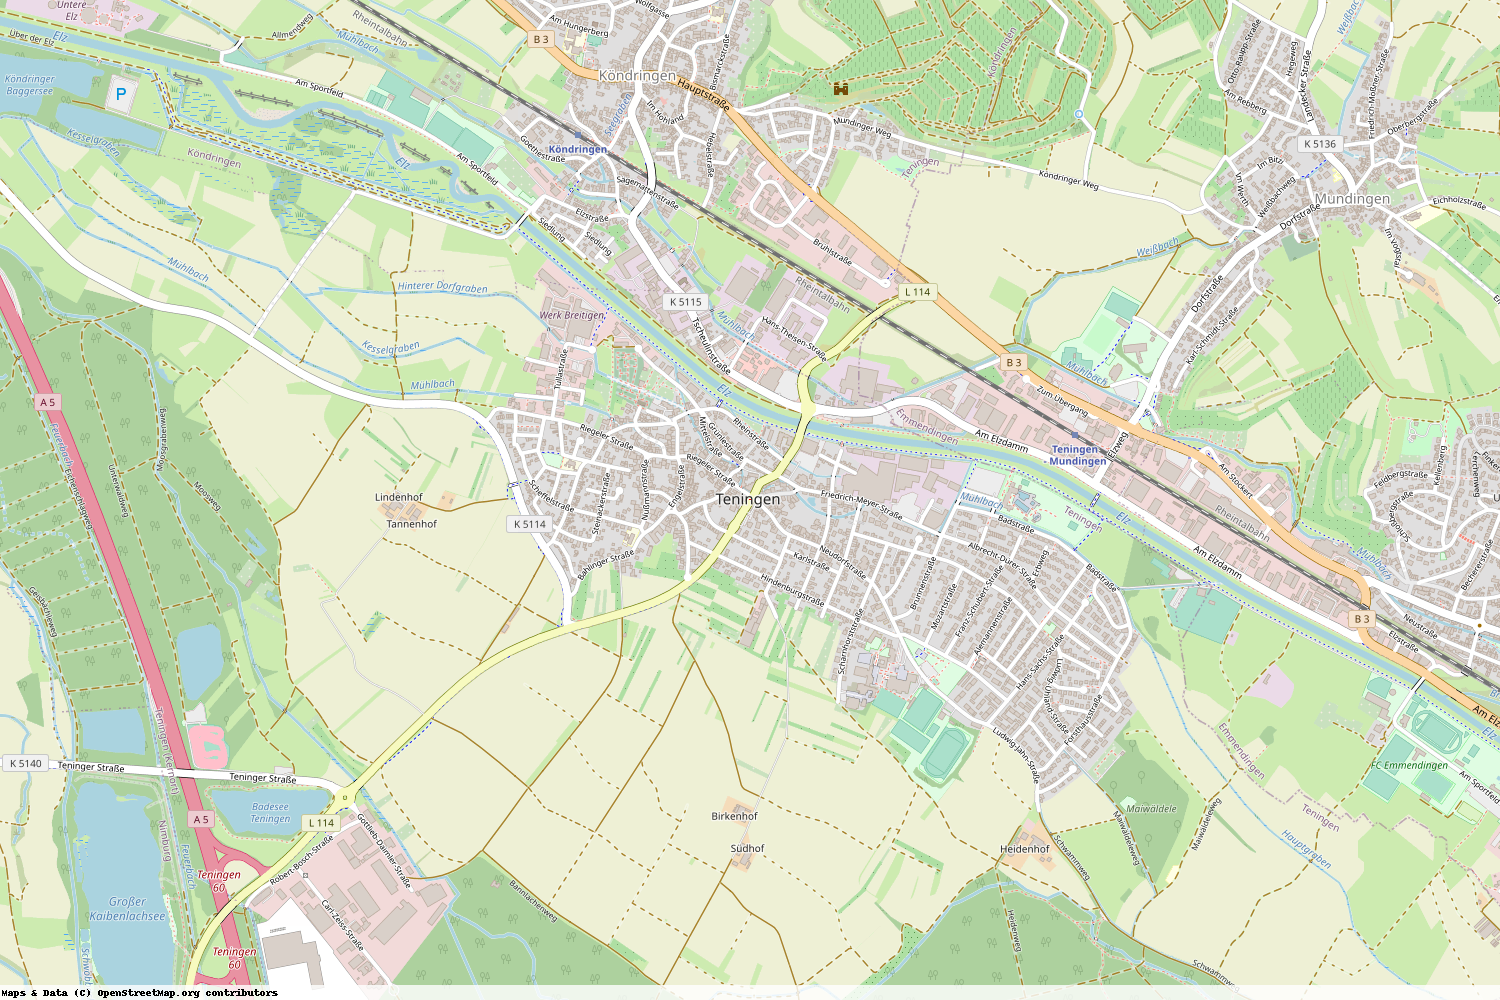 Ist gerade Stromausfall in Baden-Württemberg - Emmendingen - Teningen?